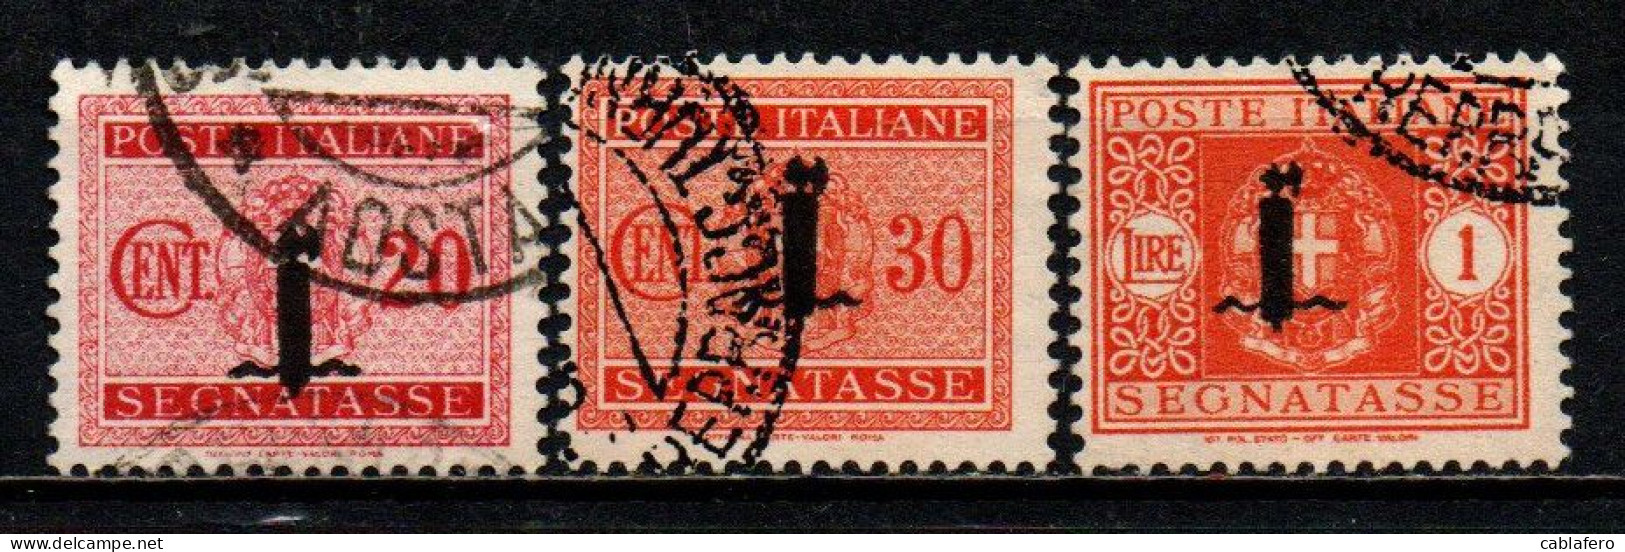 ITALIA RSI - 1944 - SEGNATASSE - FASCETTO - 20 E 30 CENT + 1 LIRA - USATI - Taxe